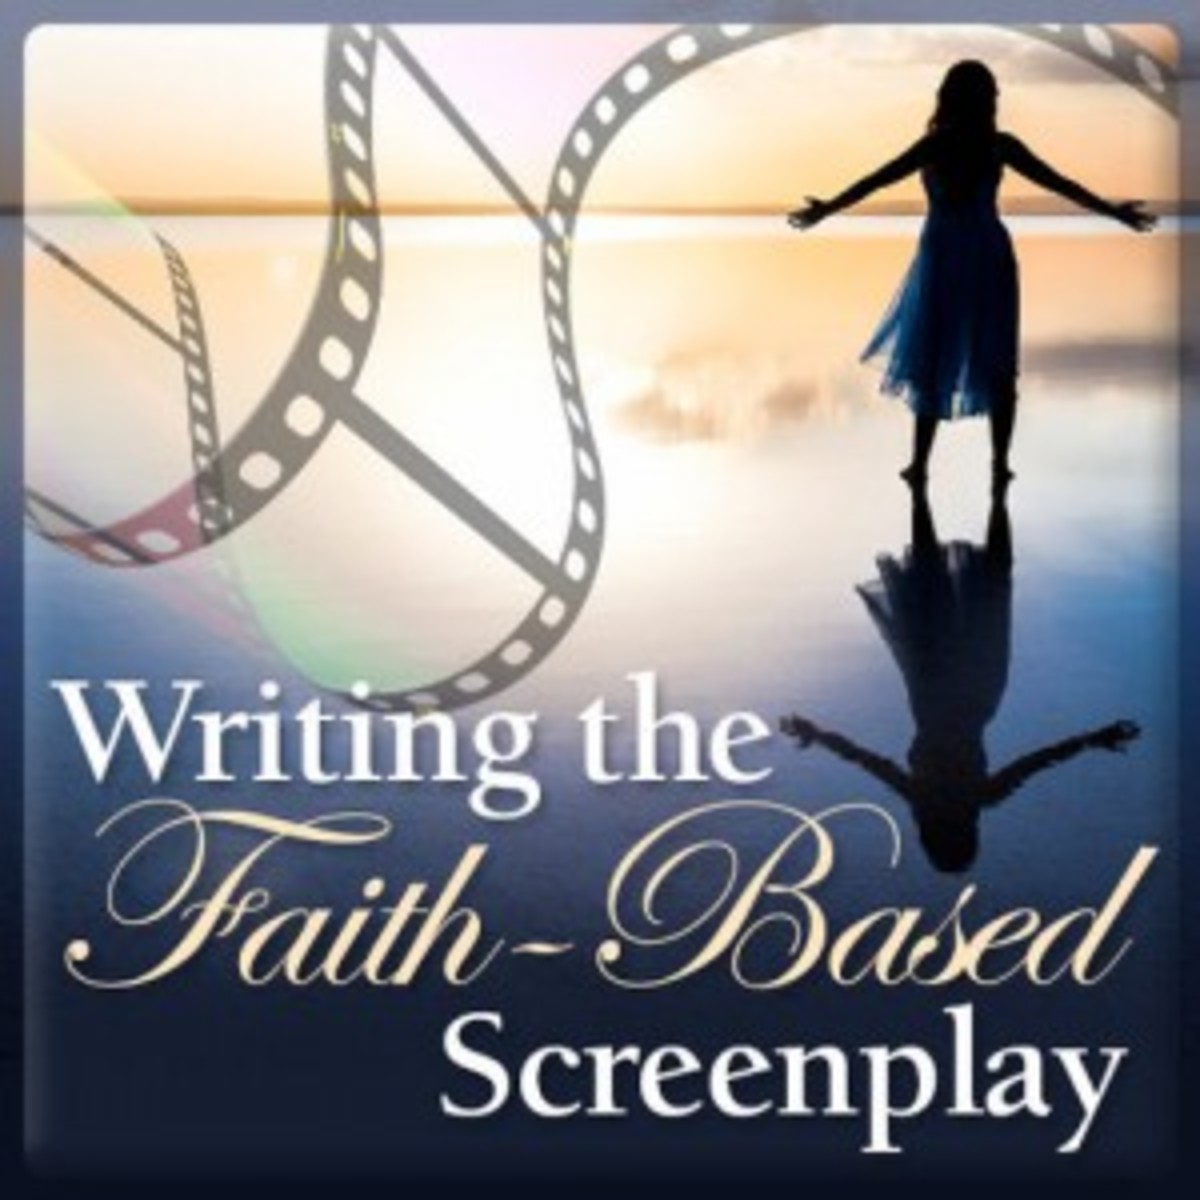 ws_faithbasedscreenplay-500_medium-1